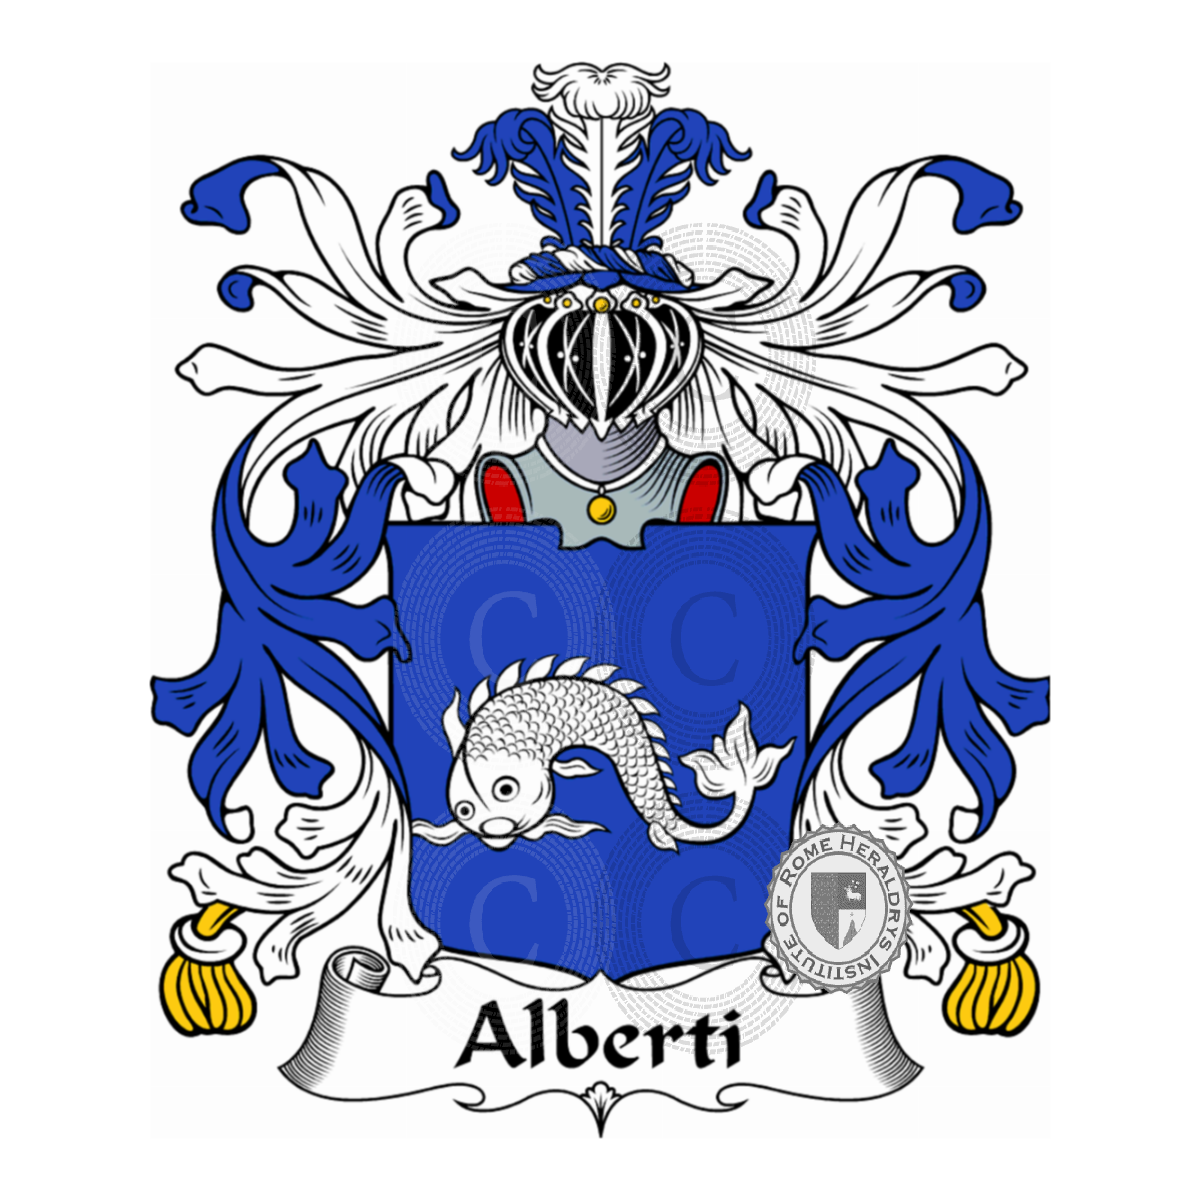 Brasão da famíliaAlberti, Alberti del Carro,Alberti di Buonaccorso,Alberti di Poja,Albertis